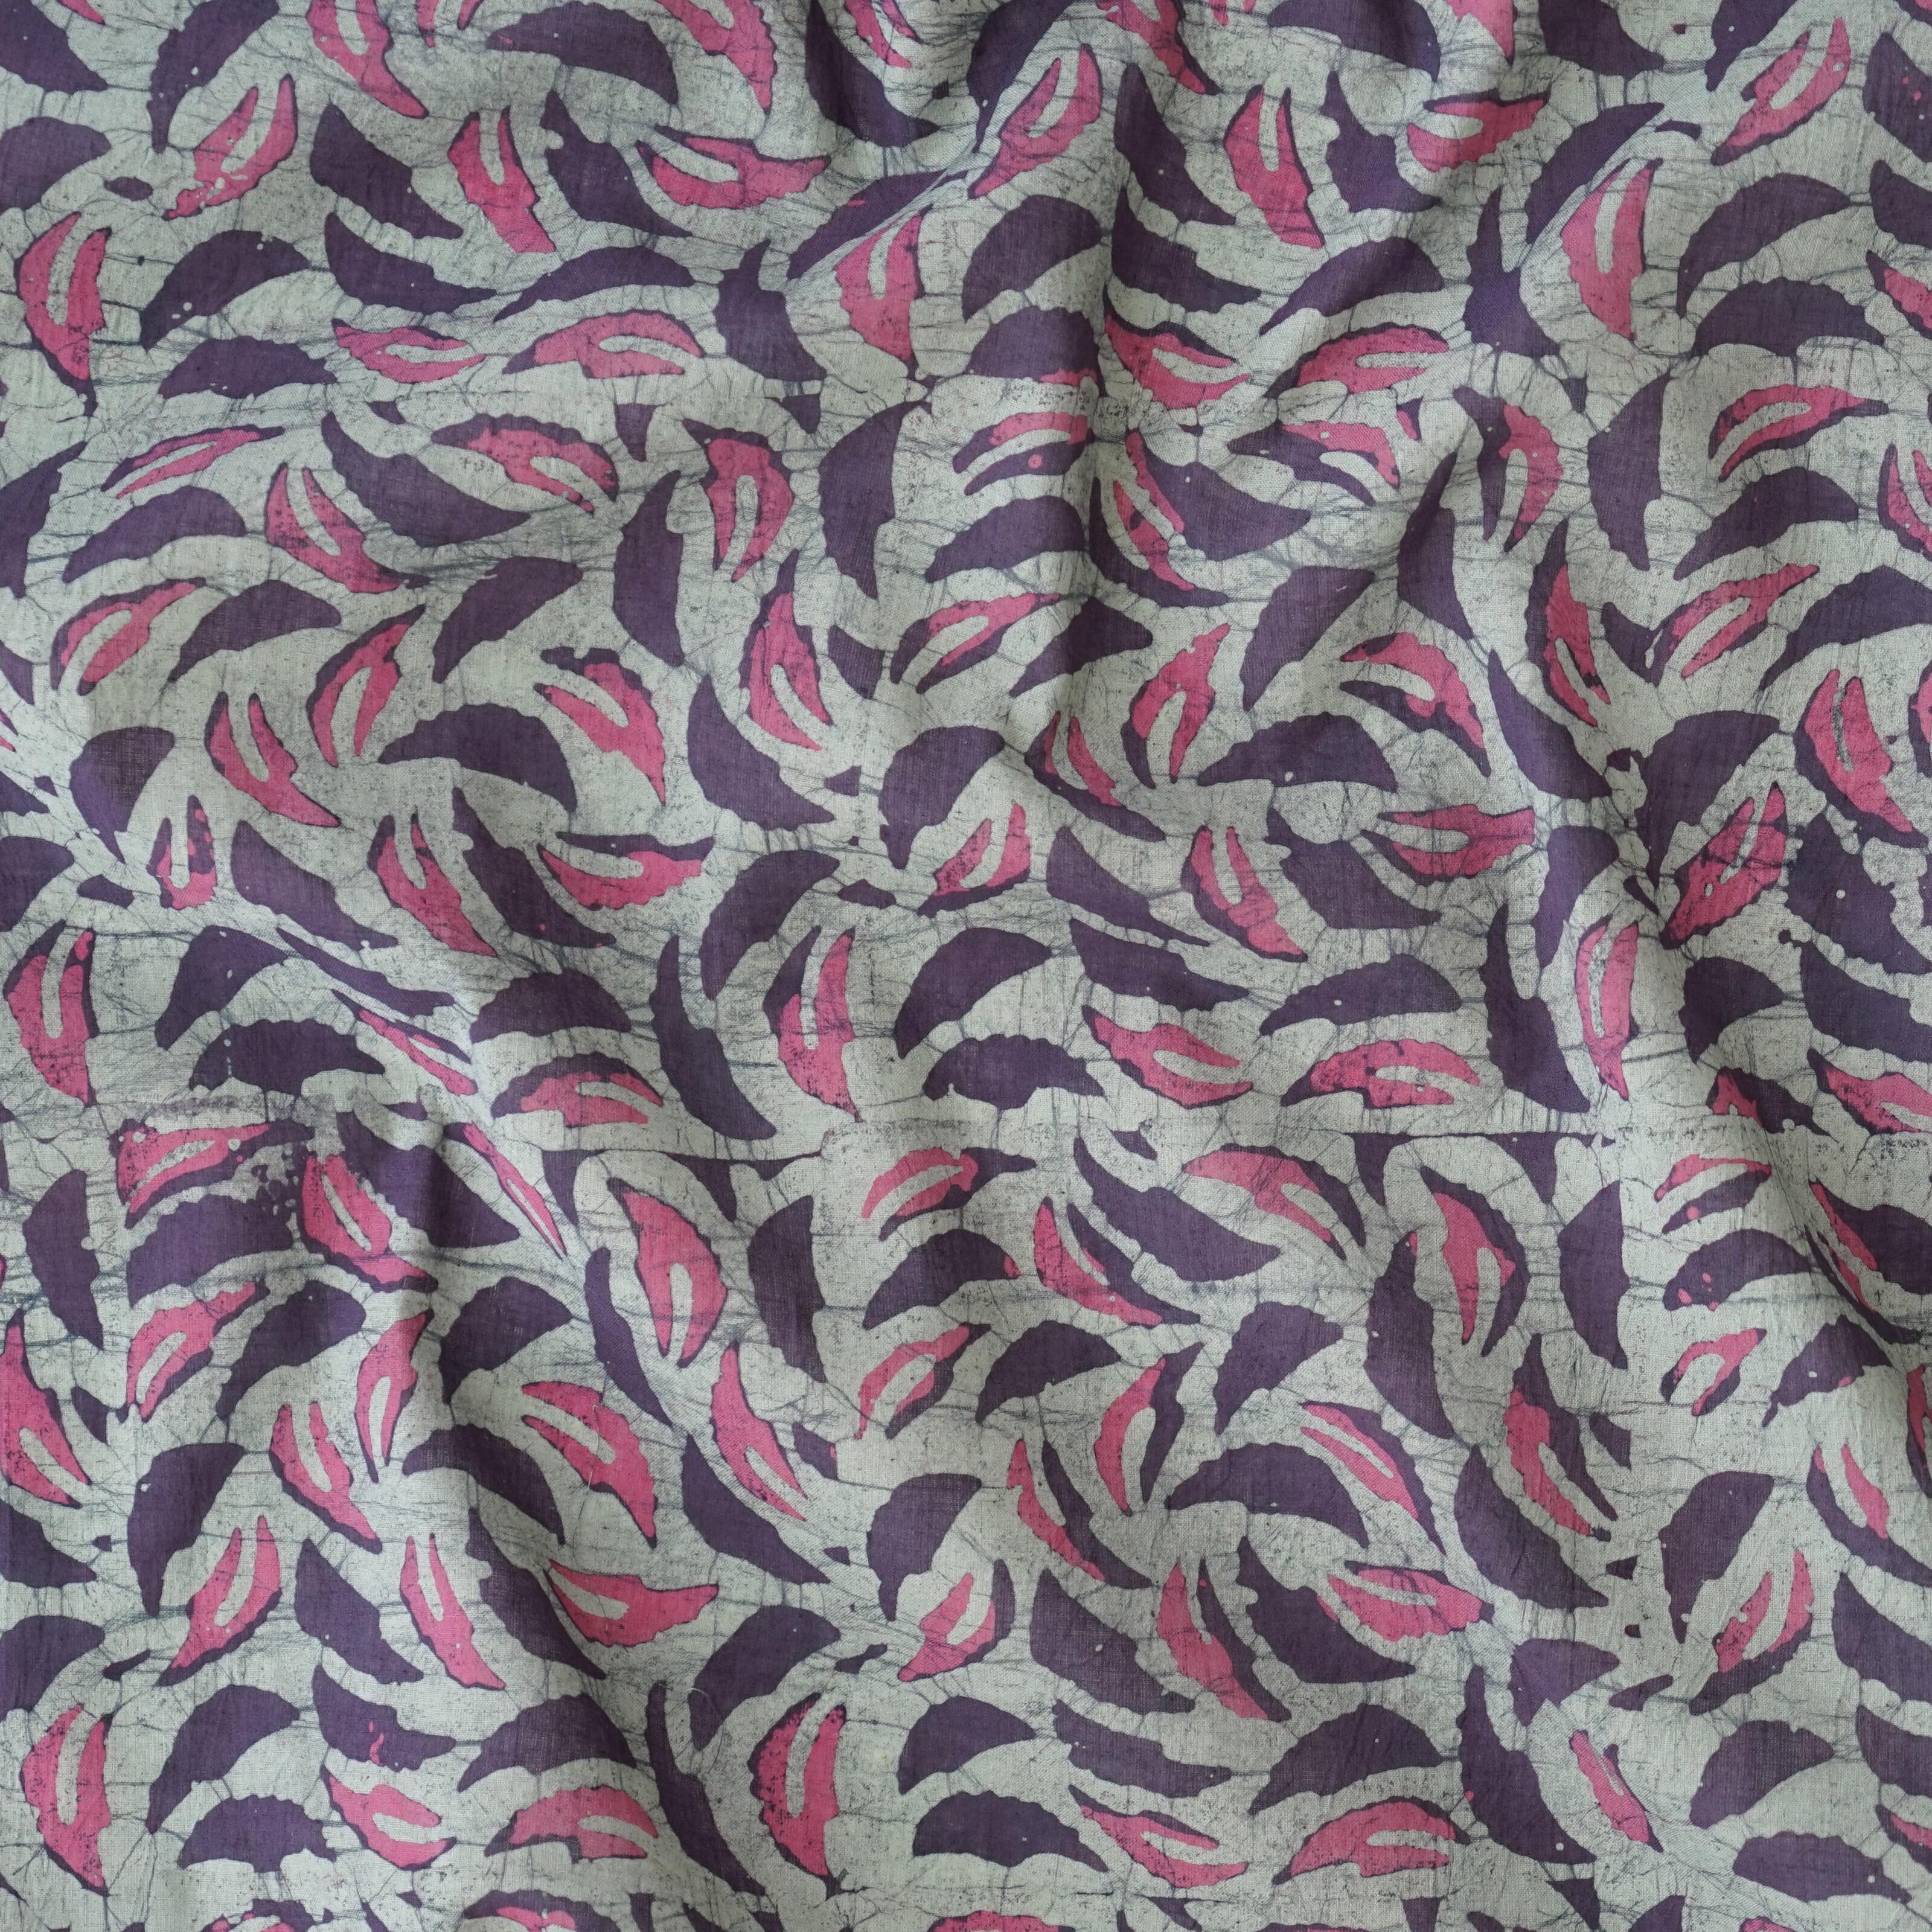 Block-Printed Batik Cotton Fabric From India - Autumnal Rustle Design - Contrast